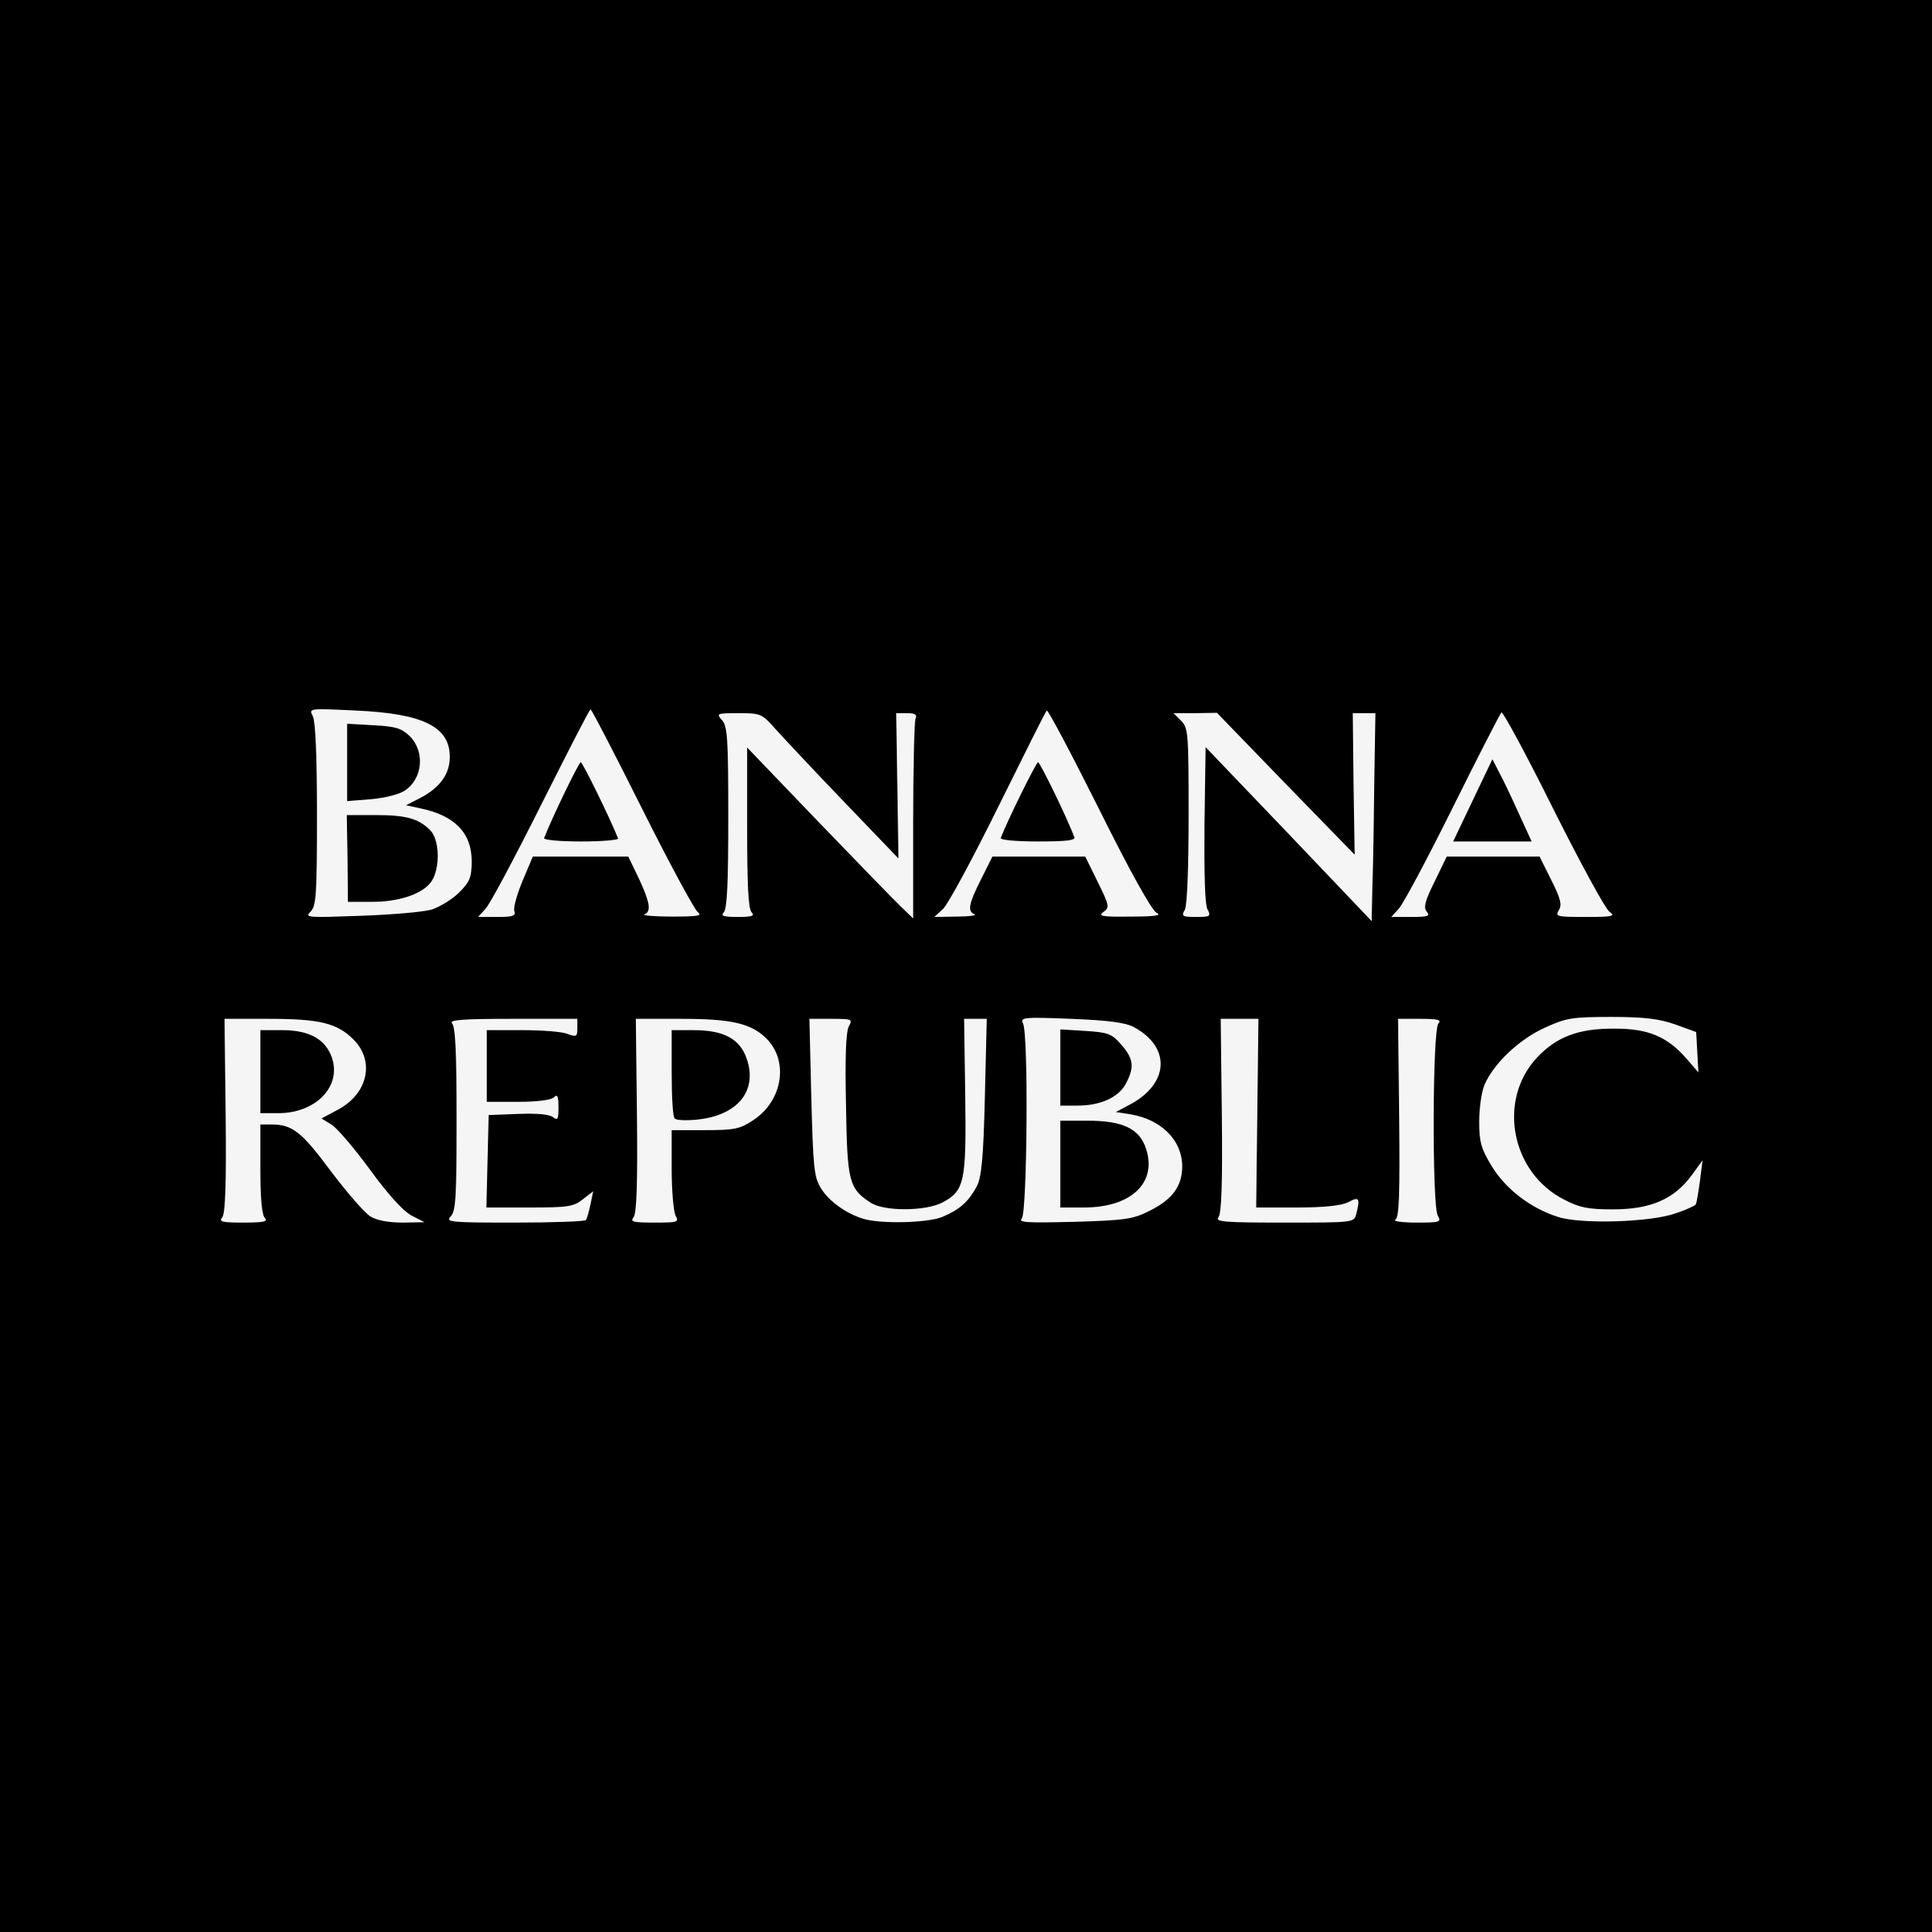 Republic Logo - Banana Republic Logo PNG Transparent & SVG Vector - Freebie Supply